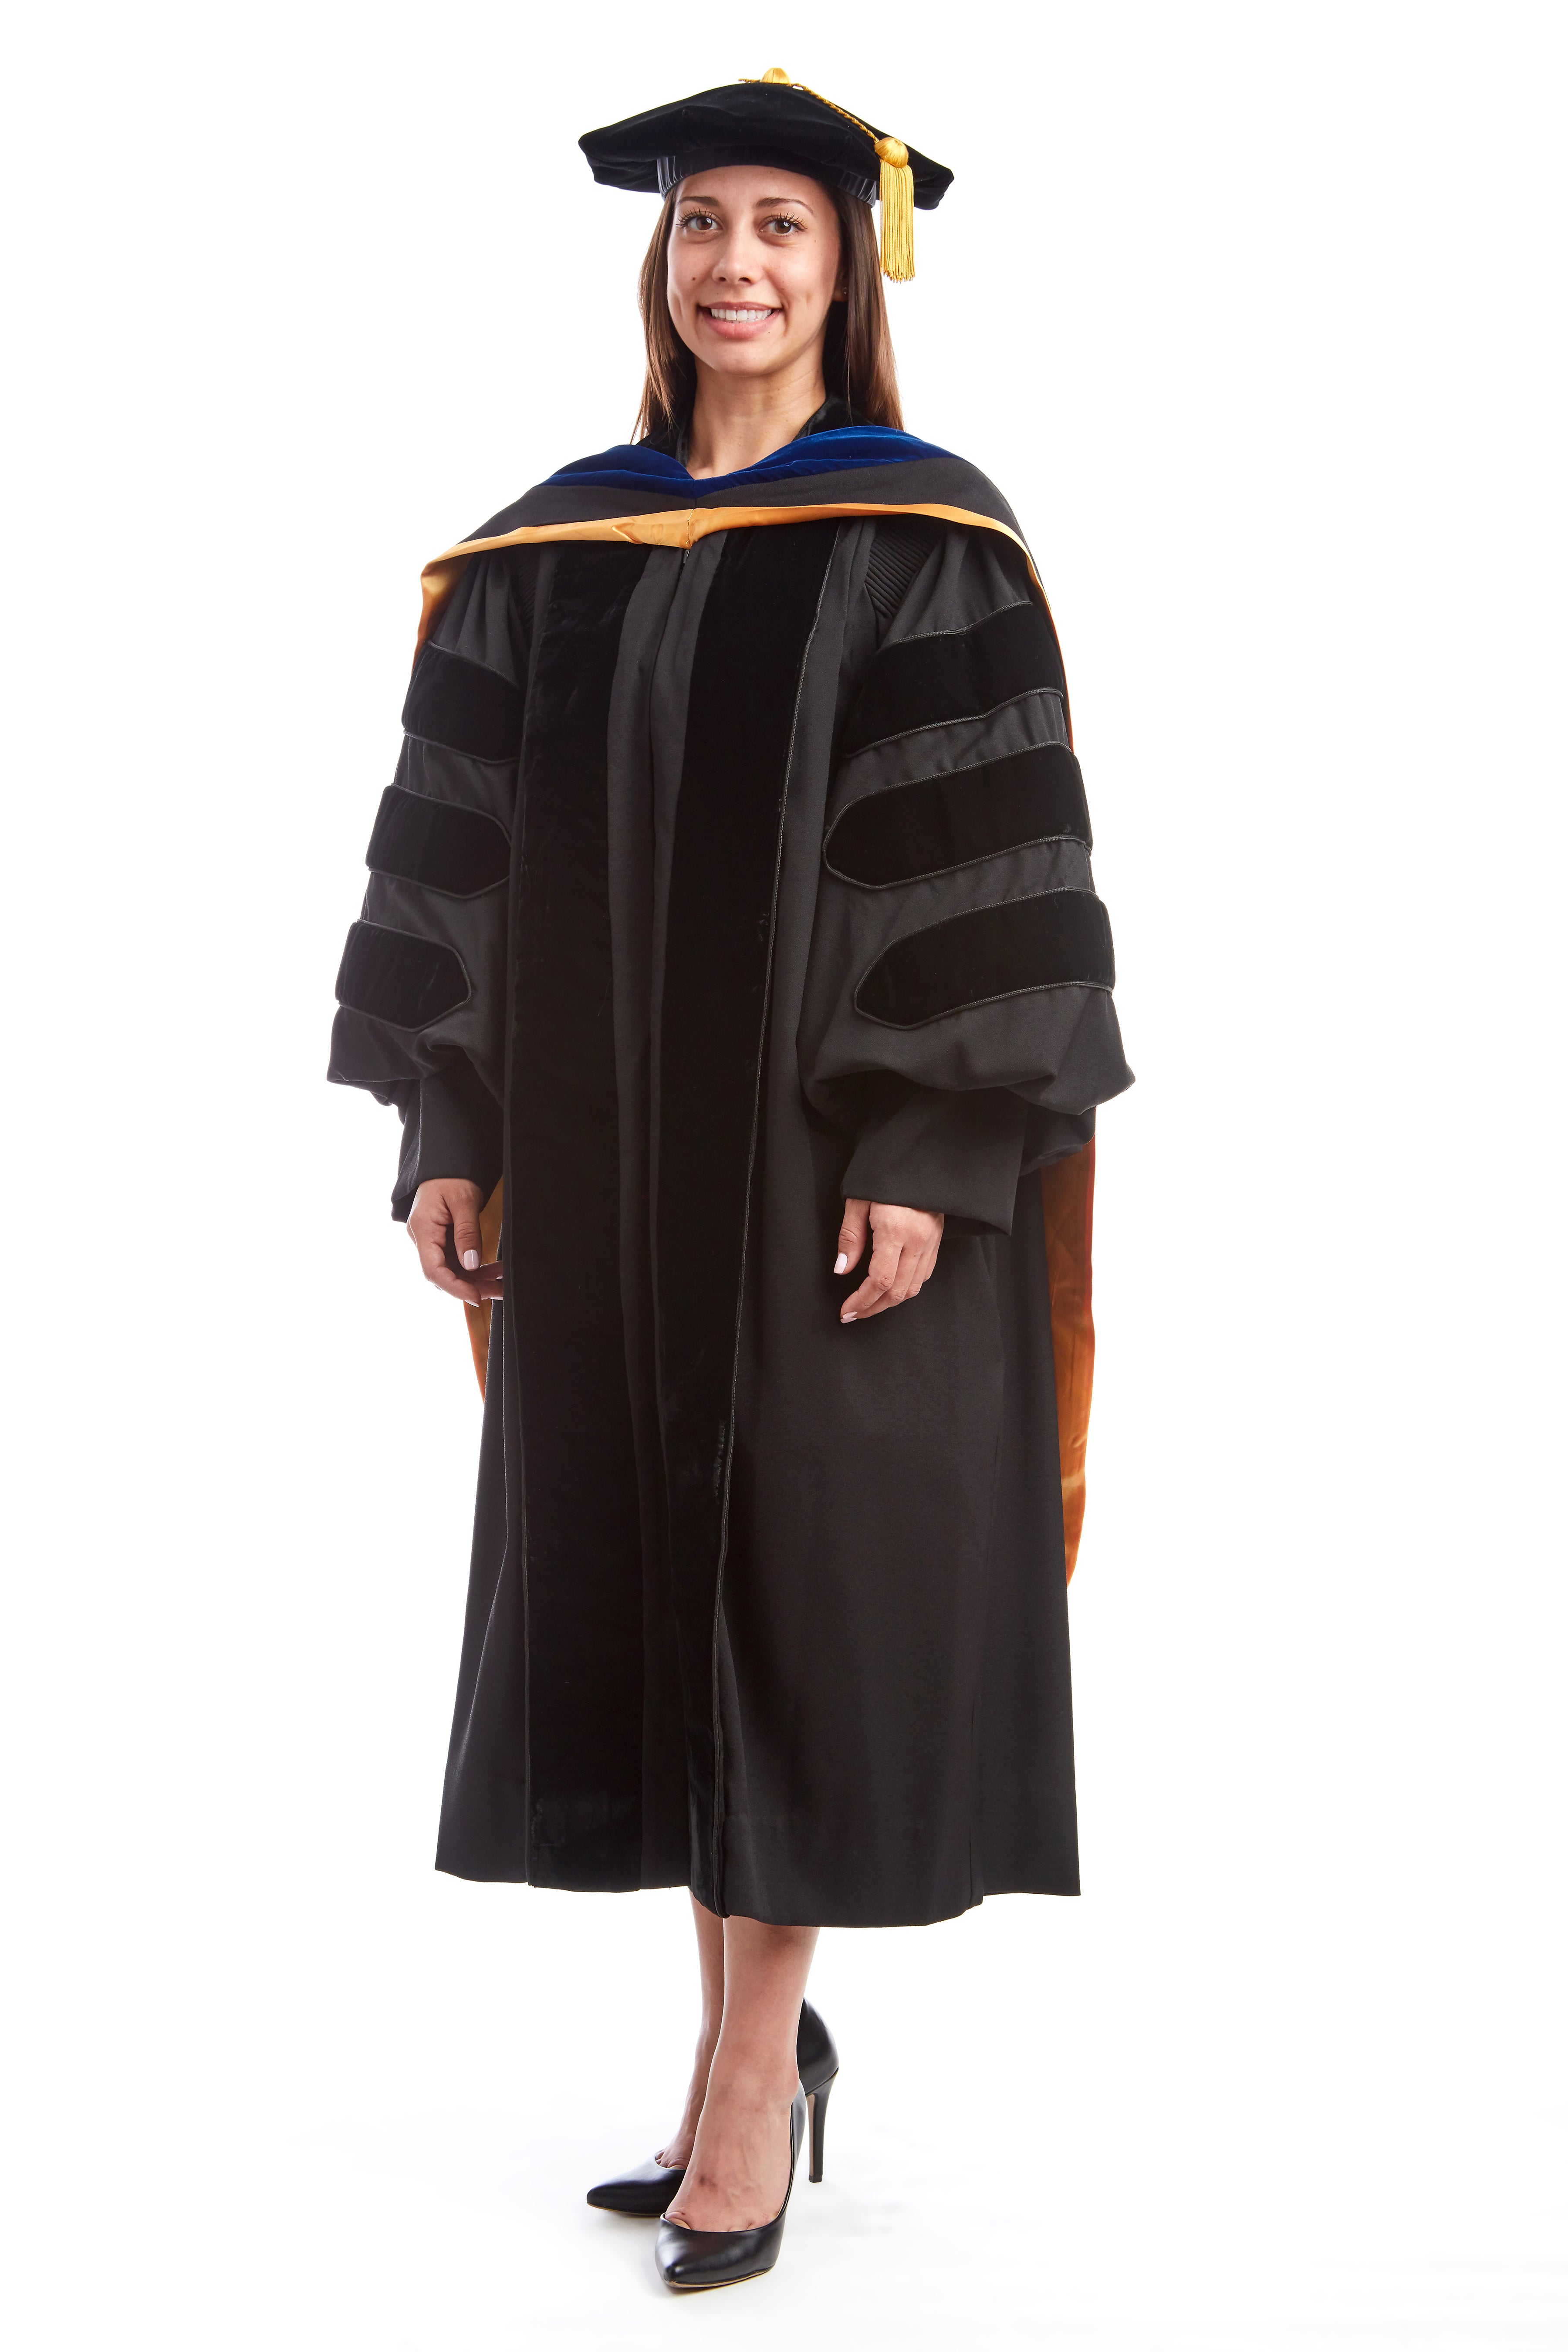 Amazon.com: Tinksky Unisex Adult Graduation Cap with Tassel Adjustable  (Black Yellow) : Clothing, Shoes & Jewelry